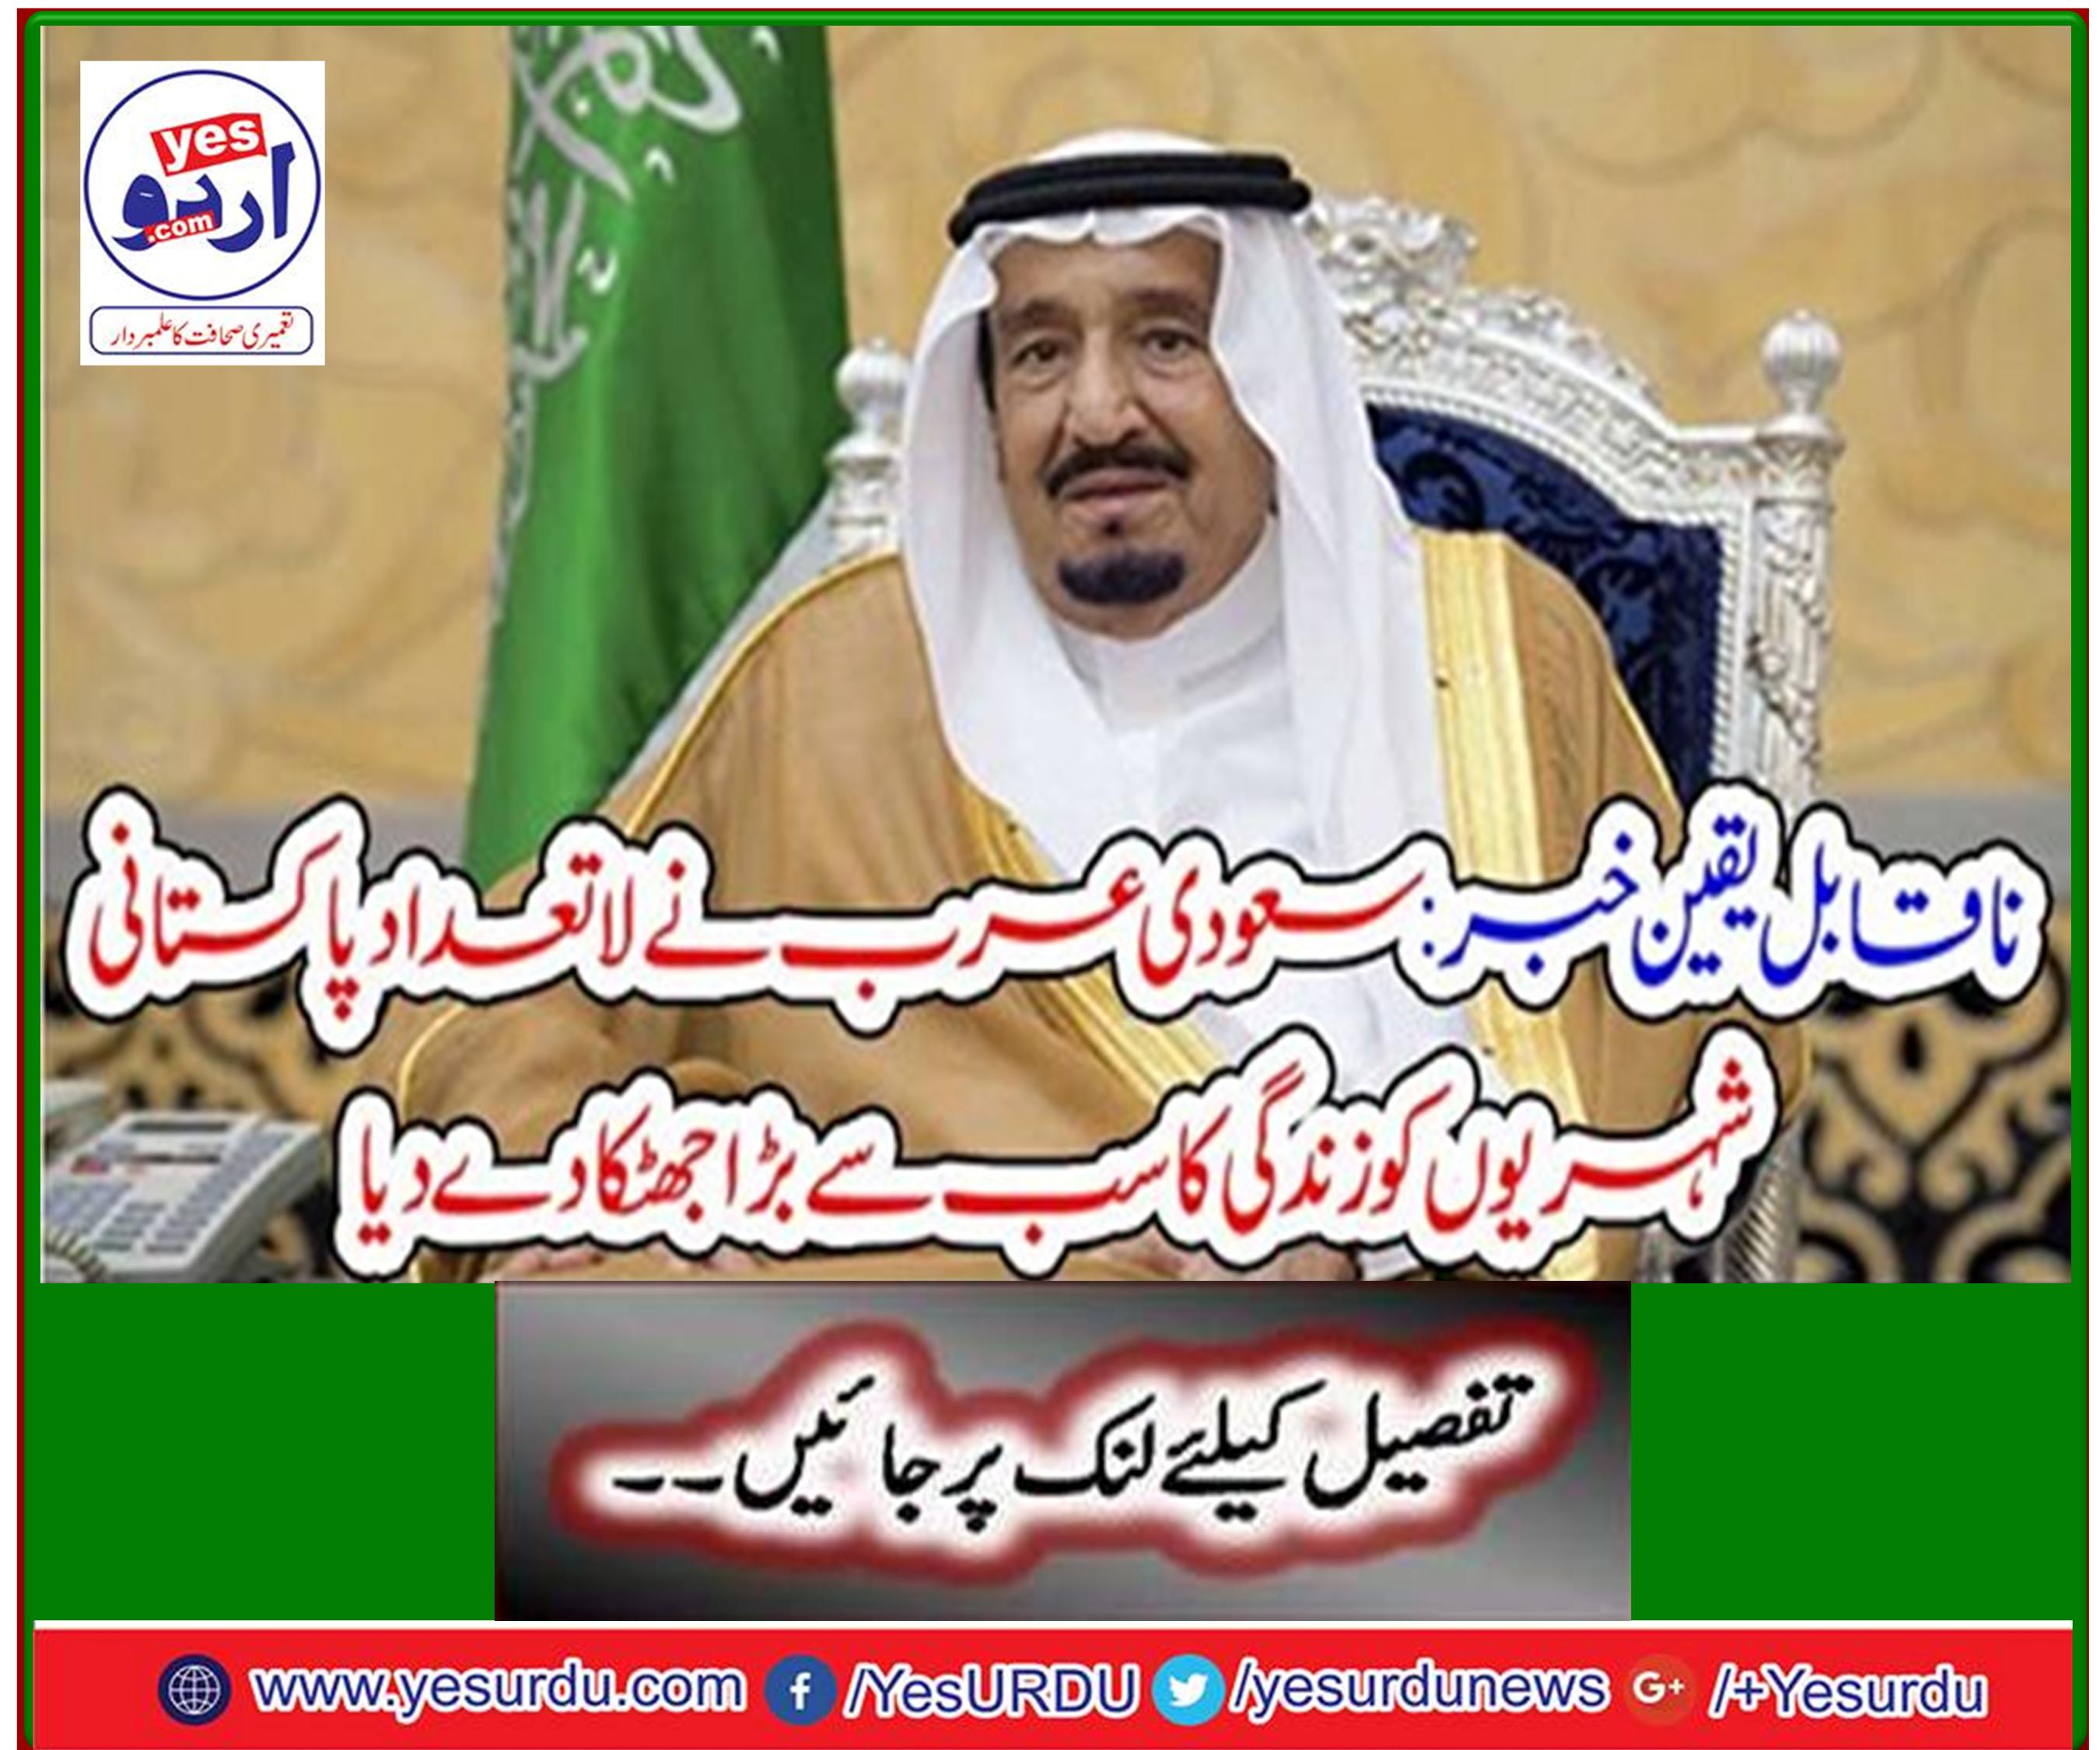 Incredible News: Saudi Arabia gives life to many Pakistani citizens